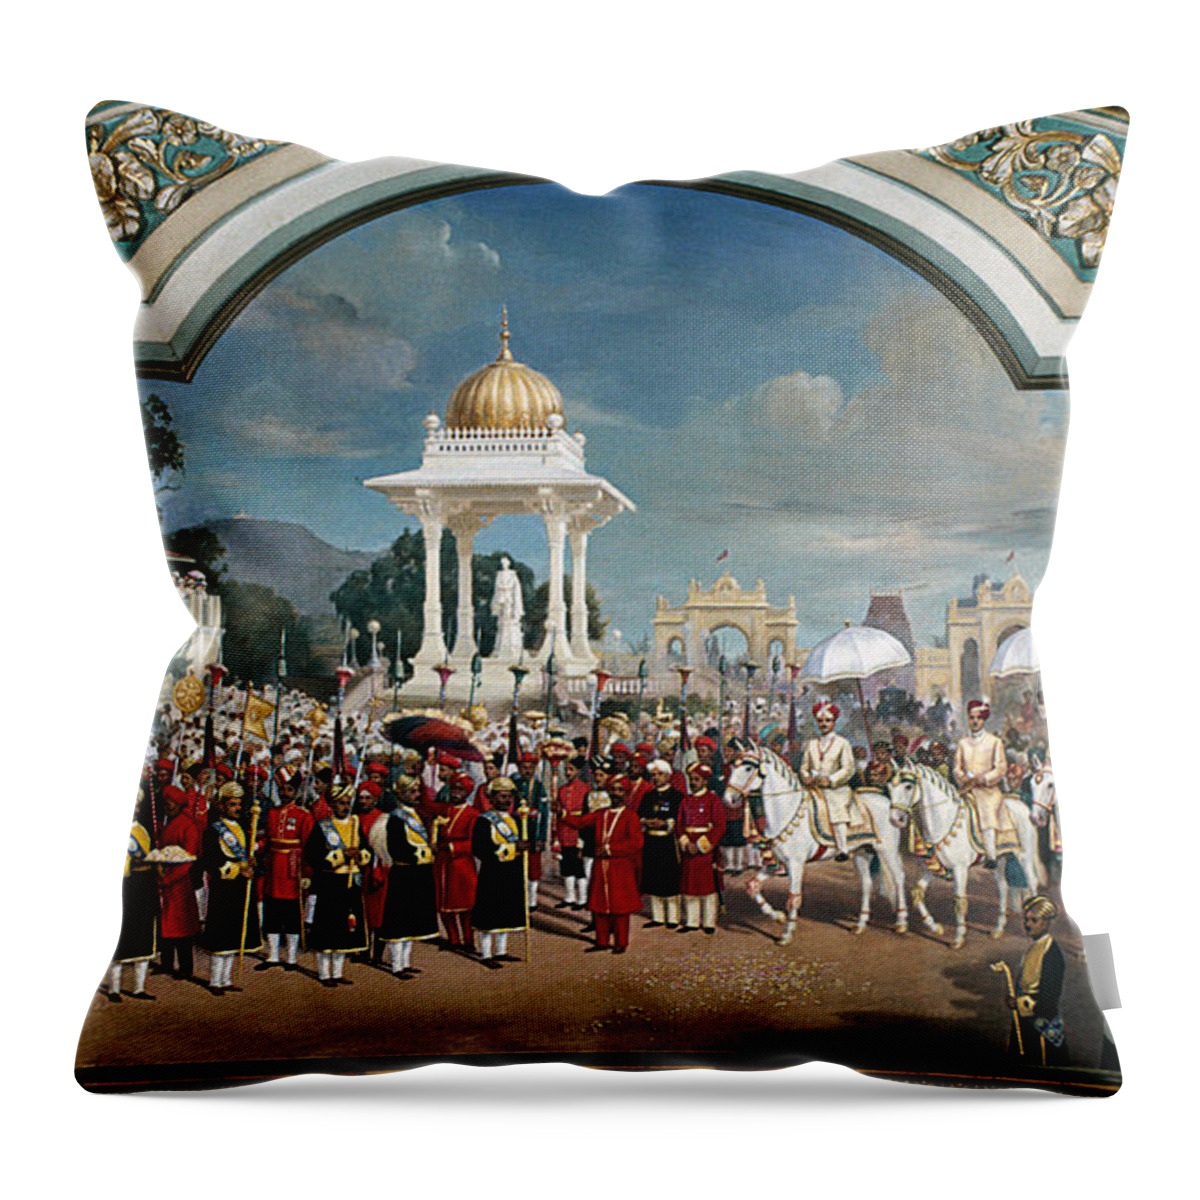 20th Century Throw Pillow featuring the painting Krishna Raja Wadiyar Iv by Granger